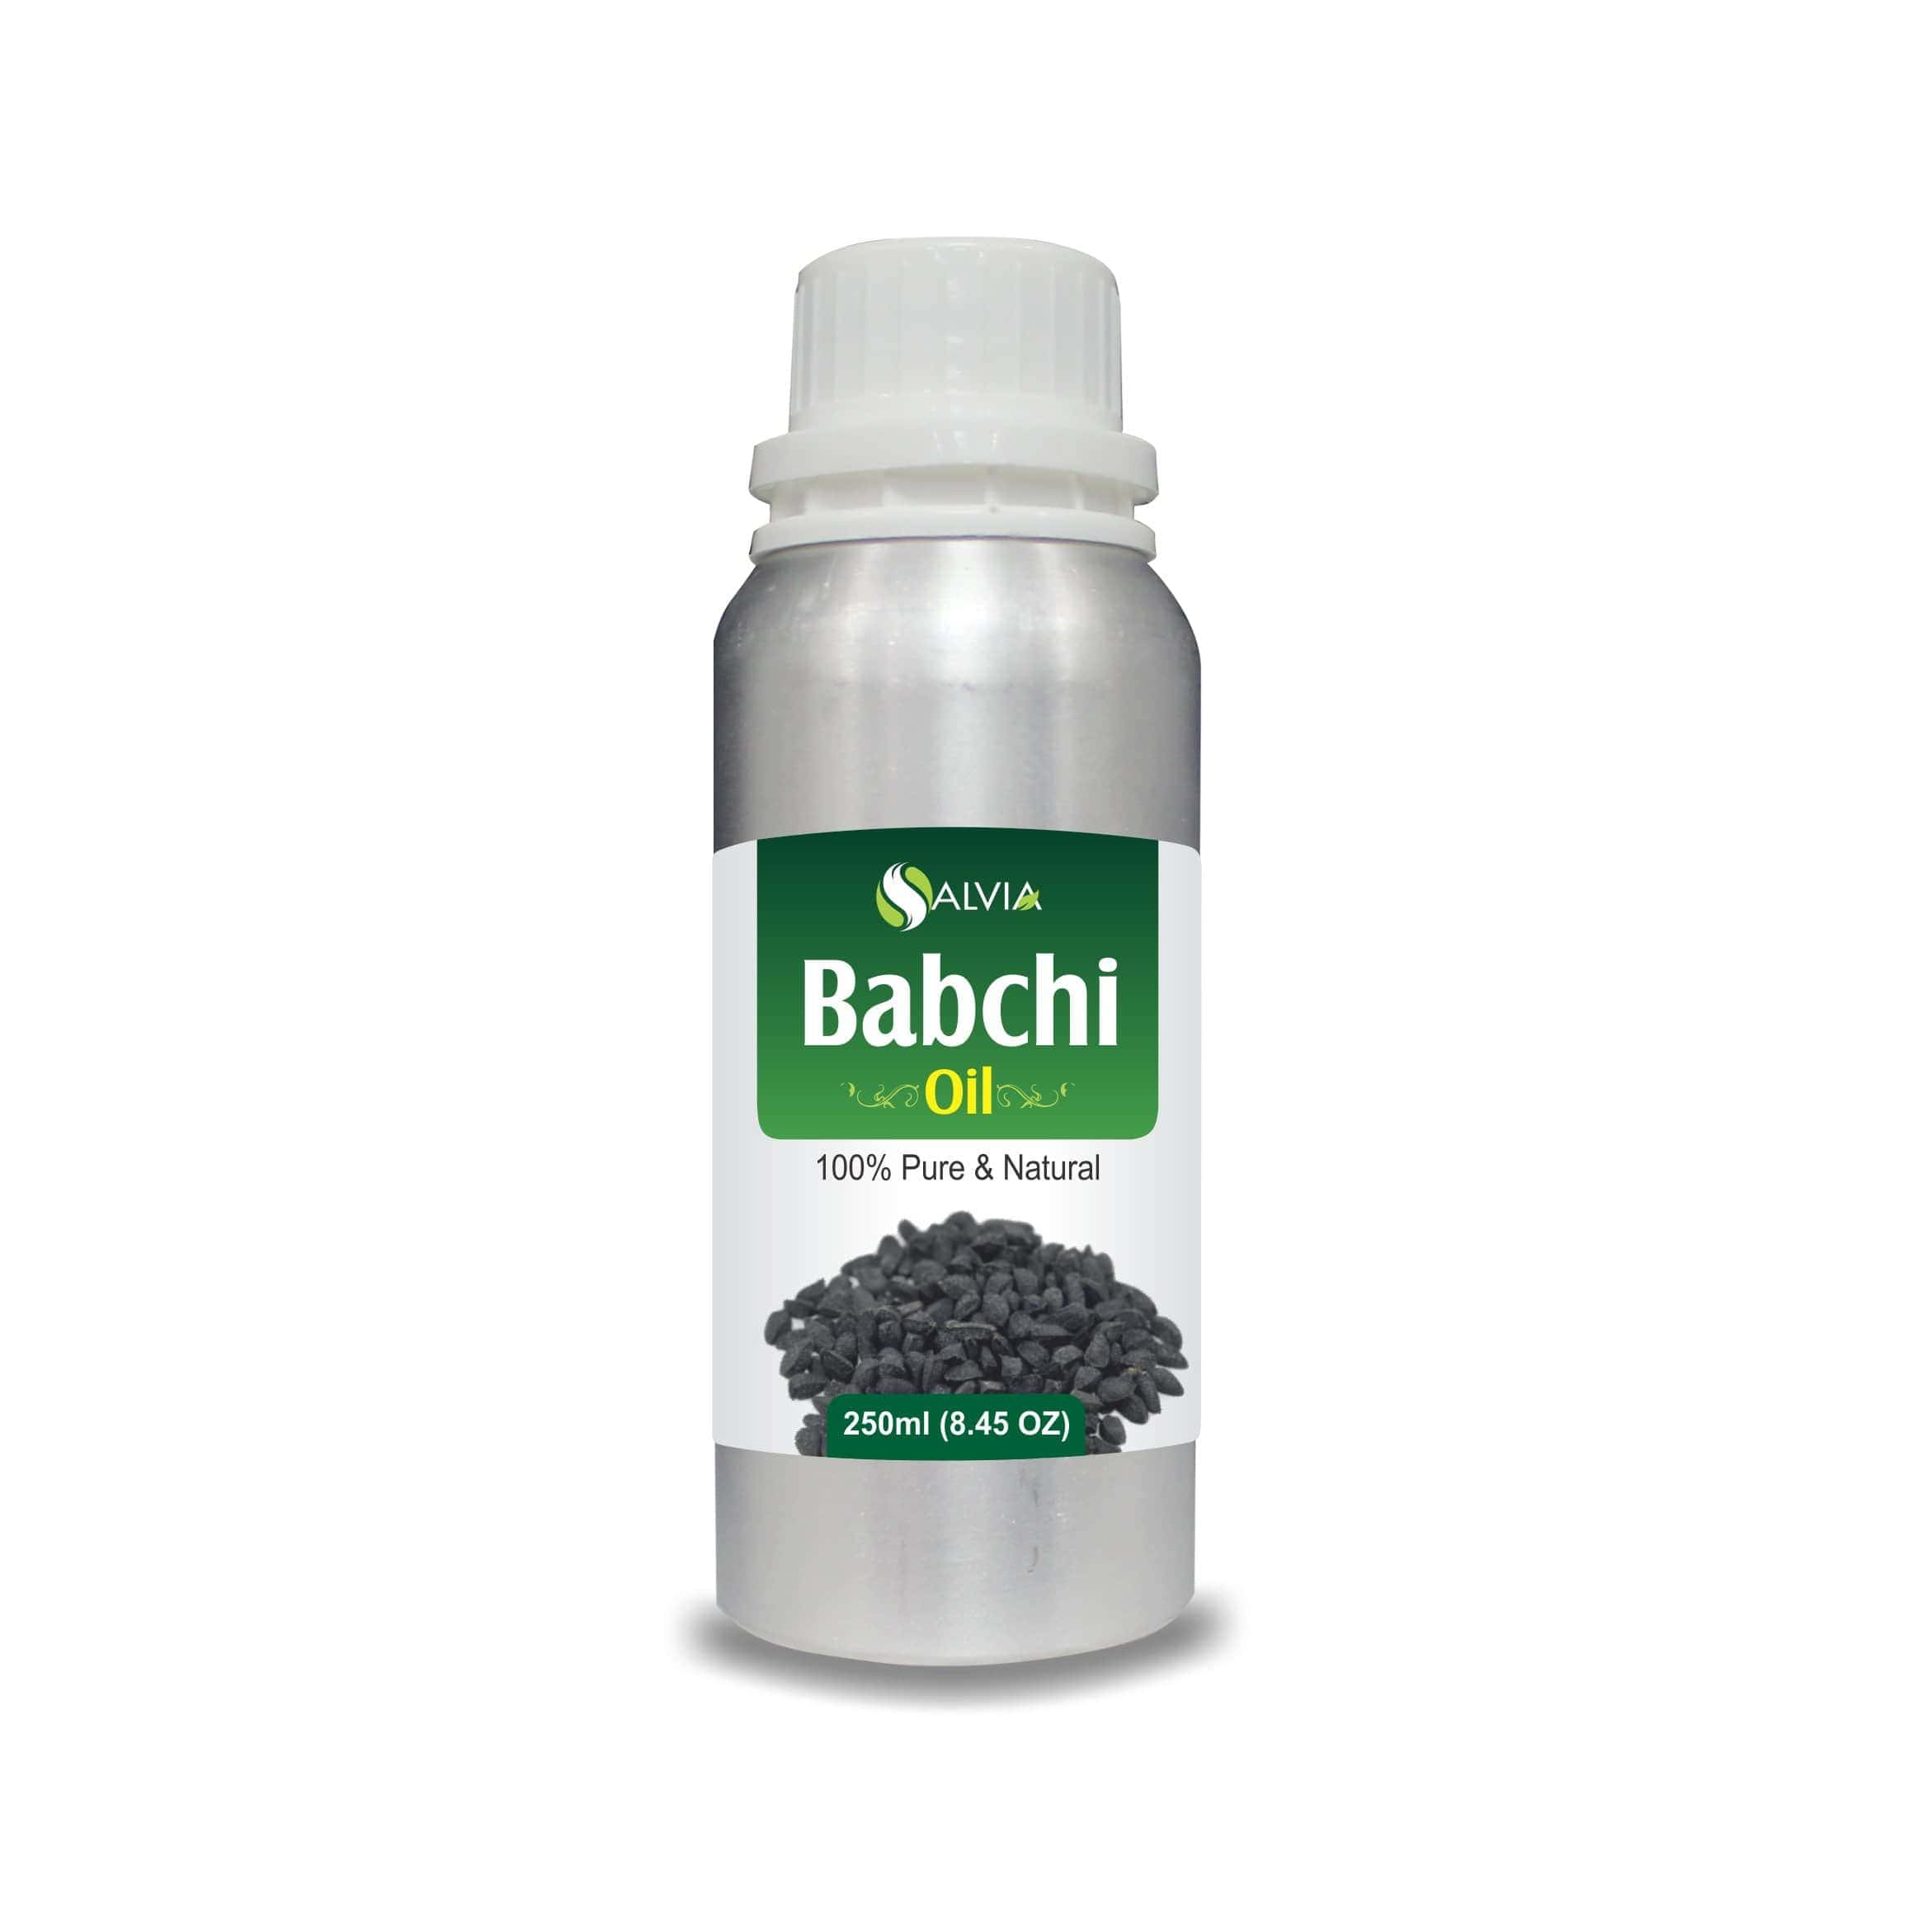 babchi oil side effects